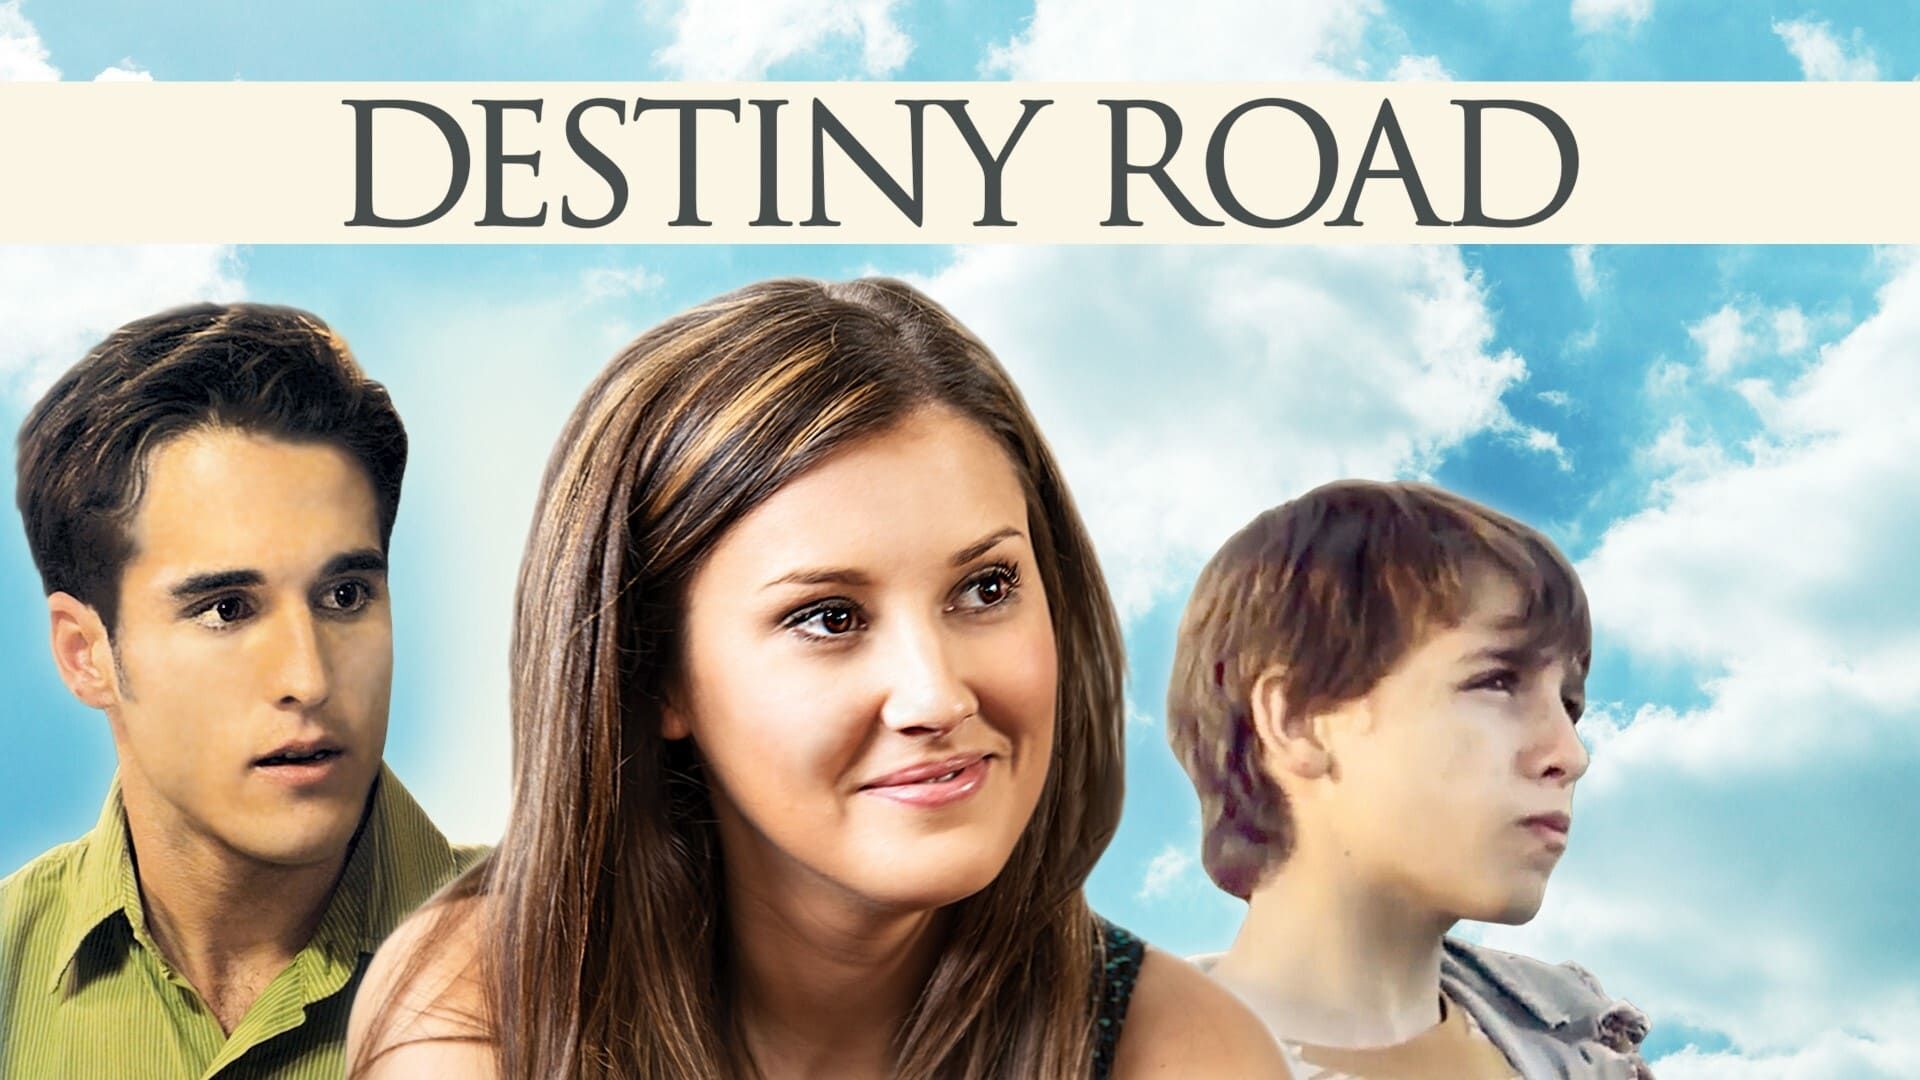 Destiny Road background